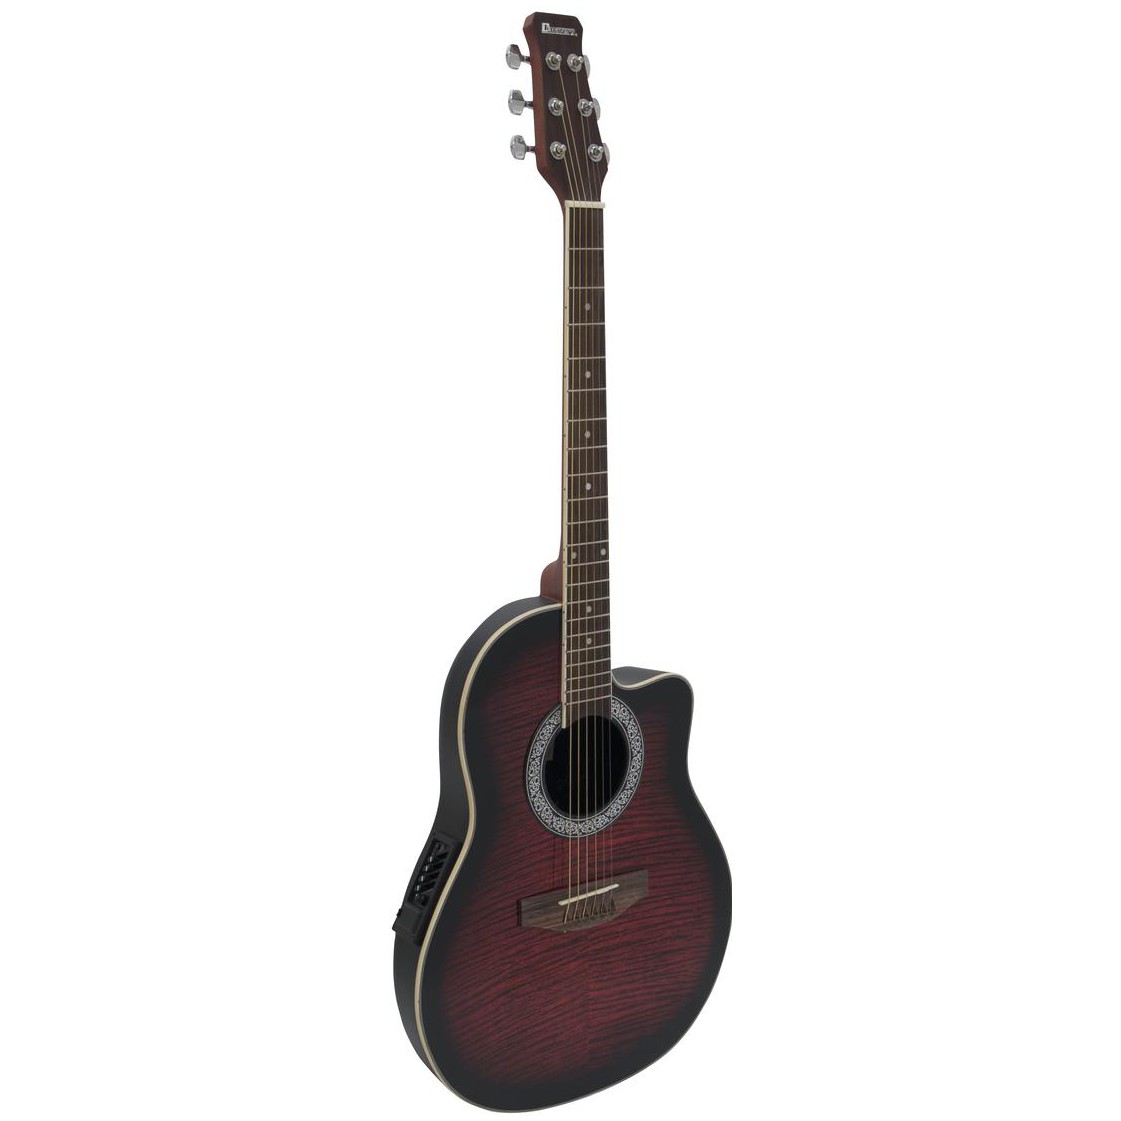 Fotografie Dimavery RB-300, elektroakustická kytara typu Ovation, stínovaná červená